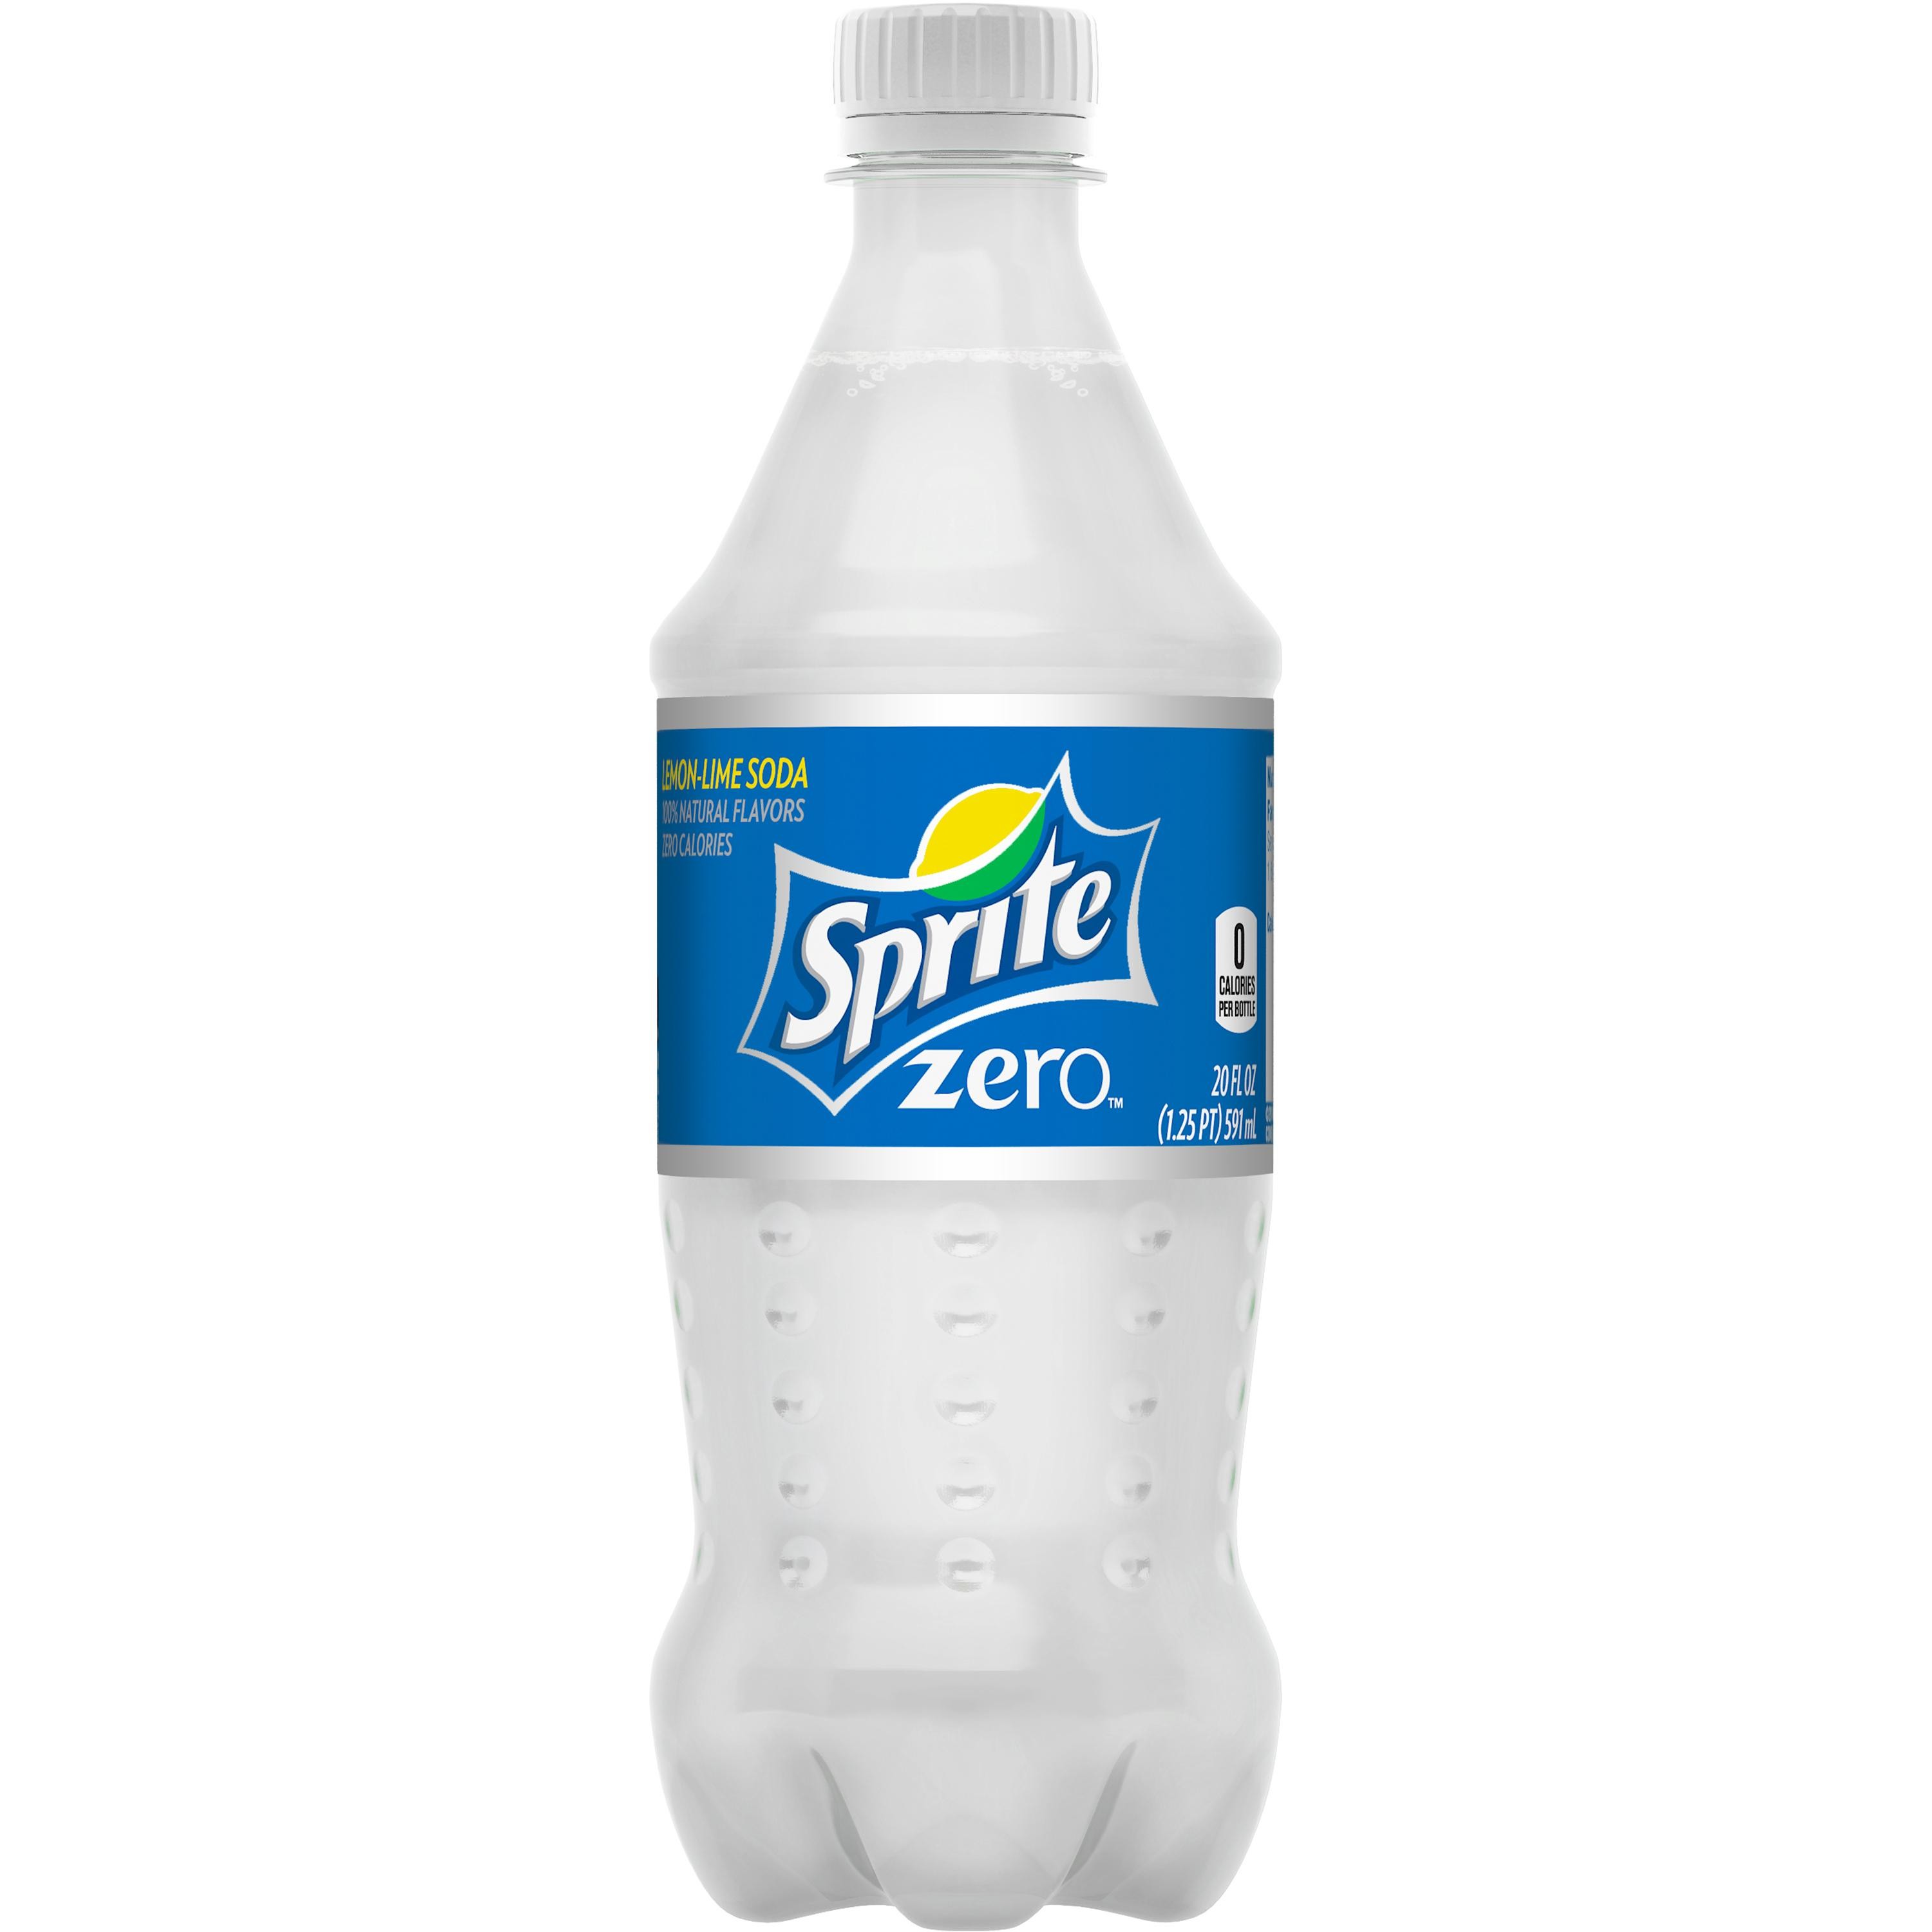 Sprite Zero Sugar Lemon Lime Diet Soda Pop Soft Drink, 20 Oz